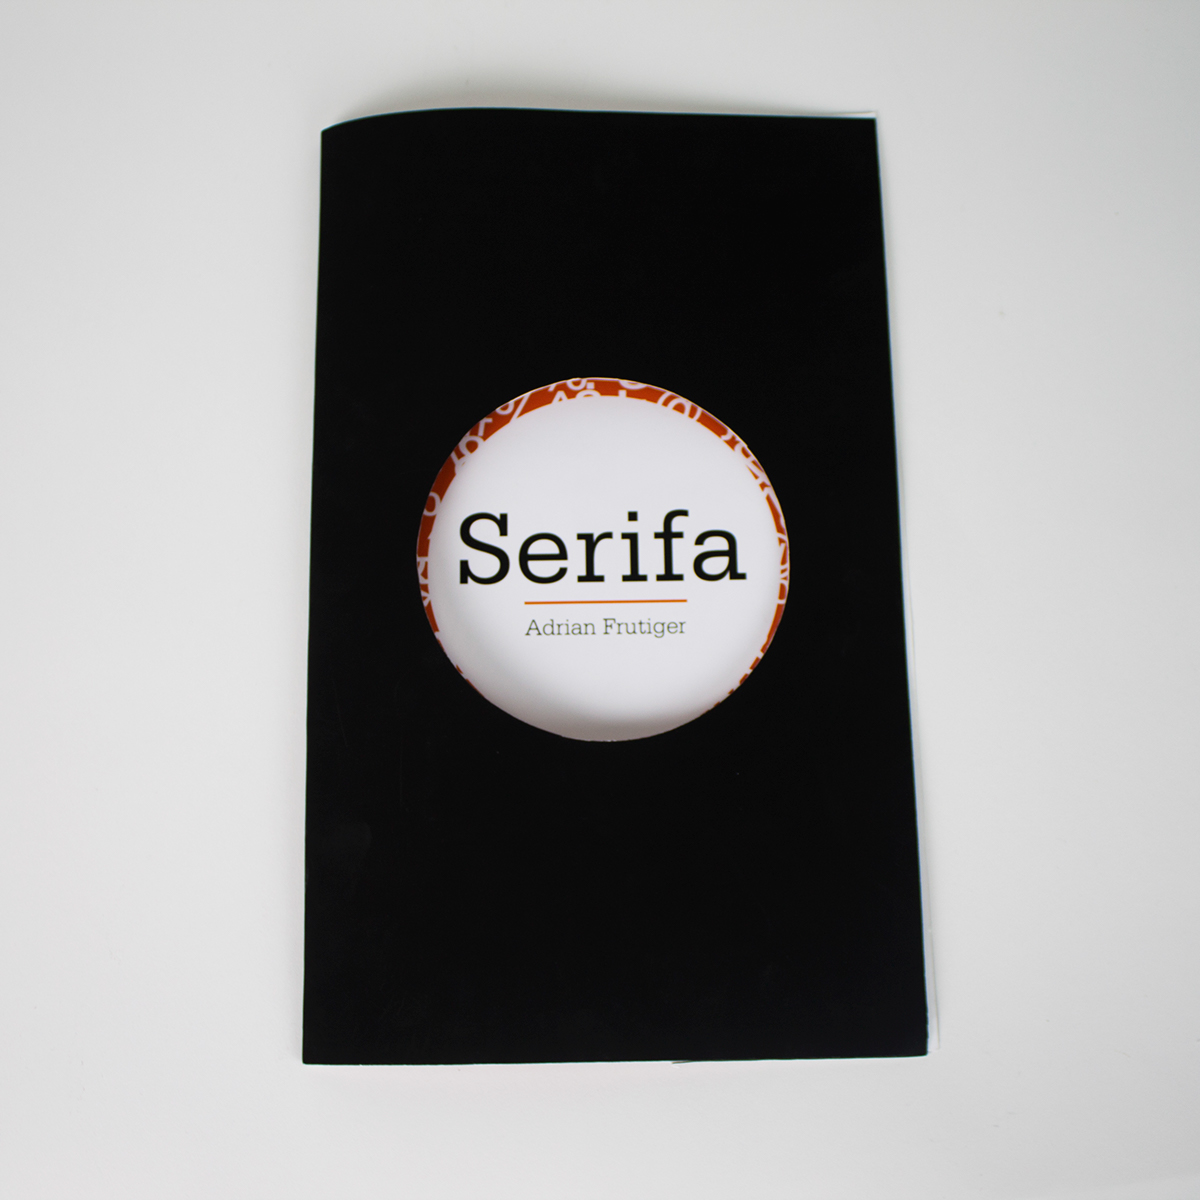 print book serifa adrian frutiger